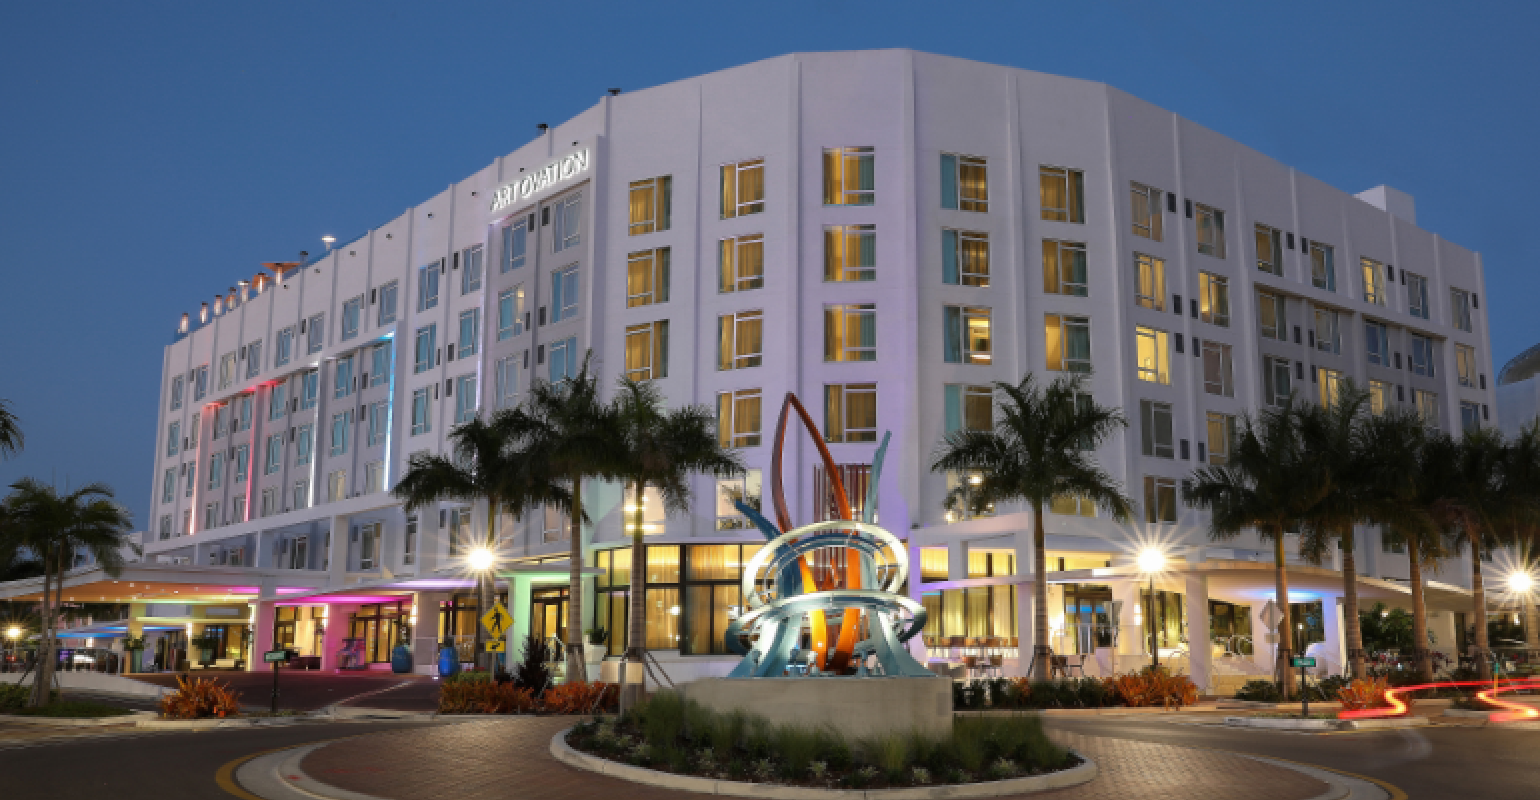 Art Ovation Hotel in Sarasota_MeetingsNet_1540 x 800.png